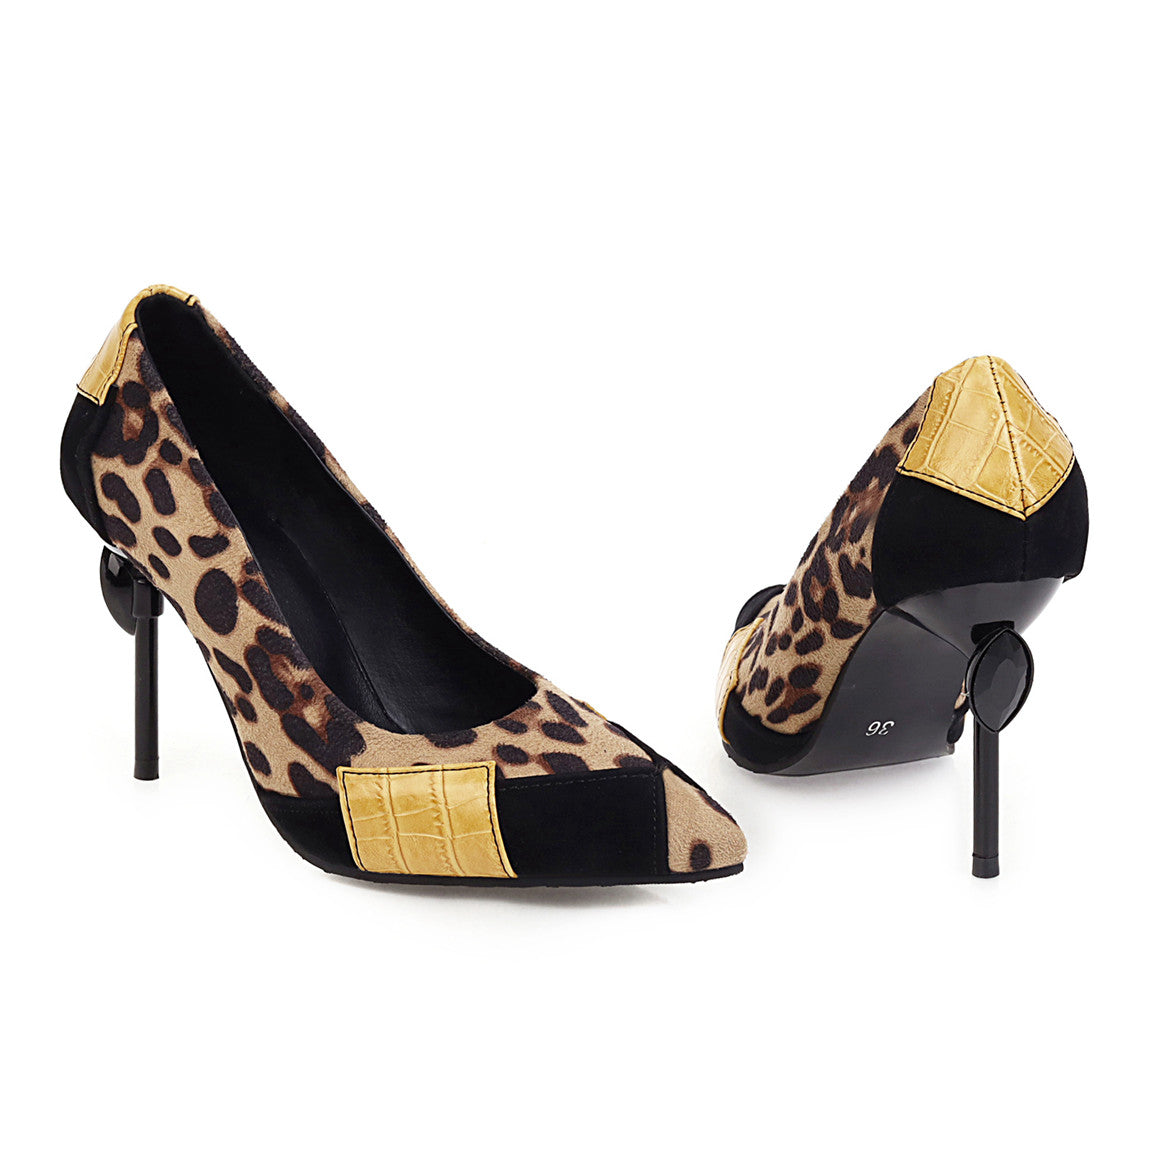 Bigsizeheels Stylish Leopard Slip-On Stiletto Heel Pointed Toe Sexy Thin Shoes - Black Leopard freeshipping - bigsizeheel®-size5-size15 -All Plus Sizes Available!